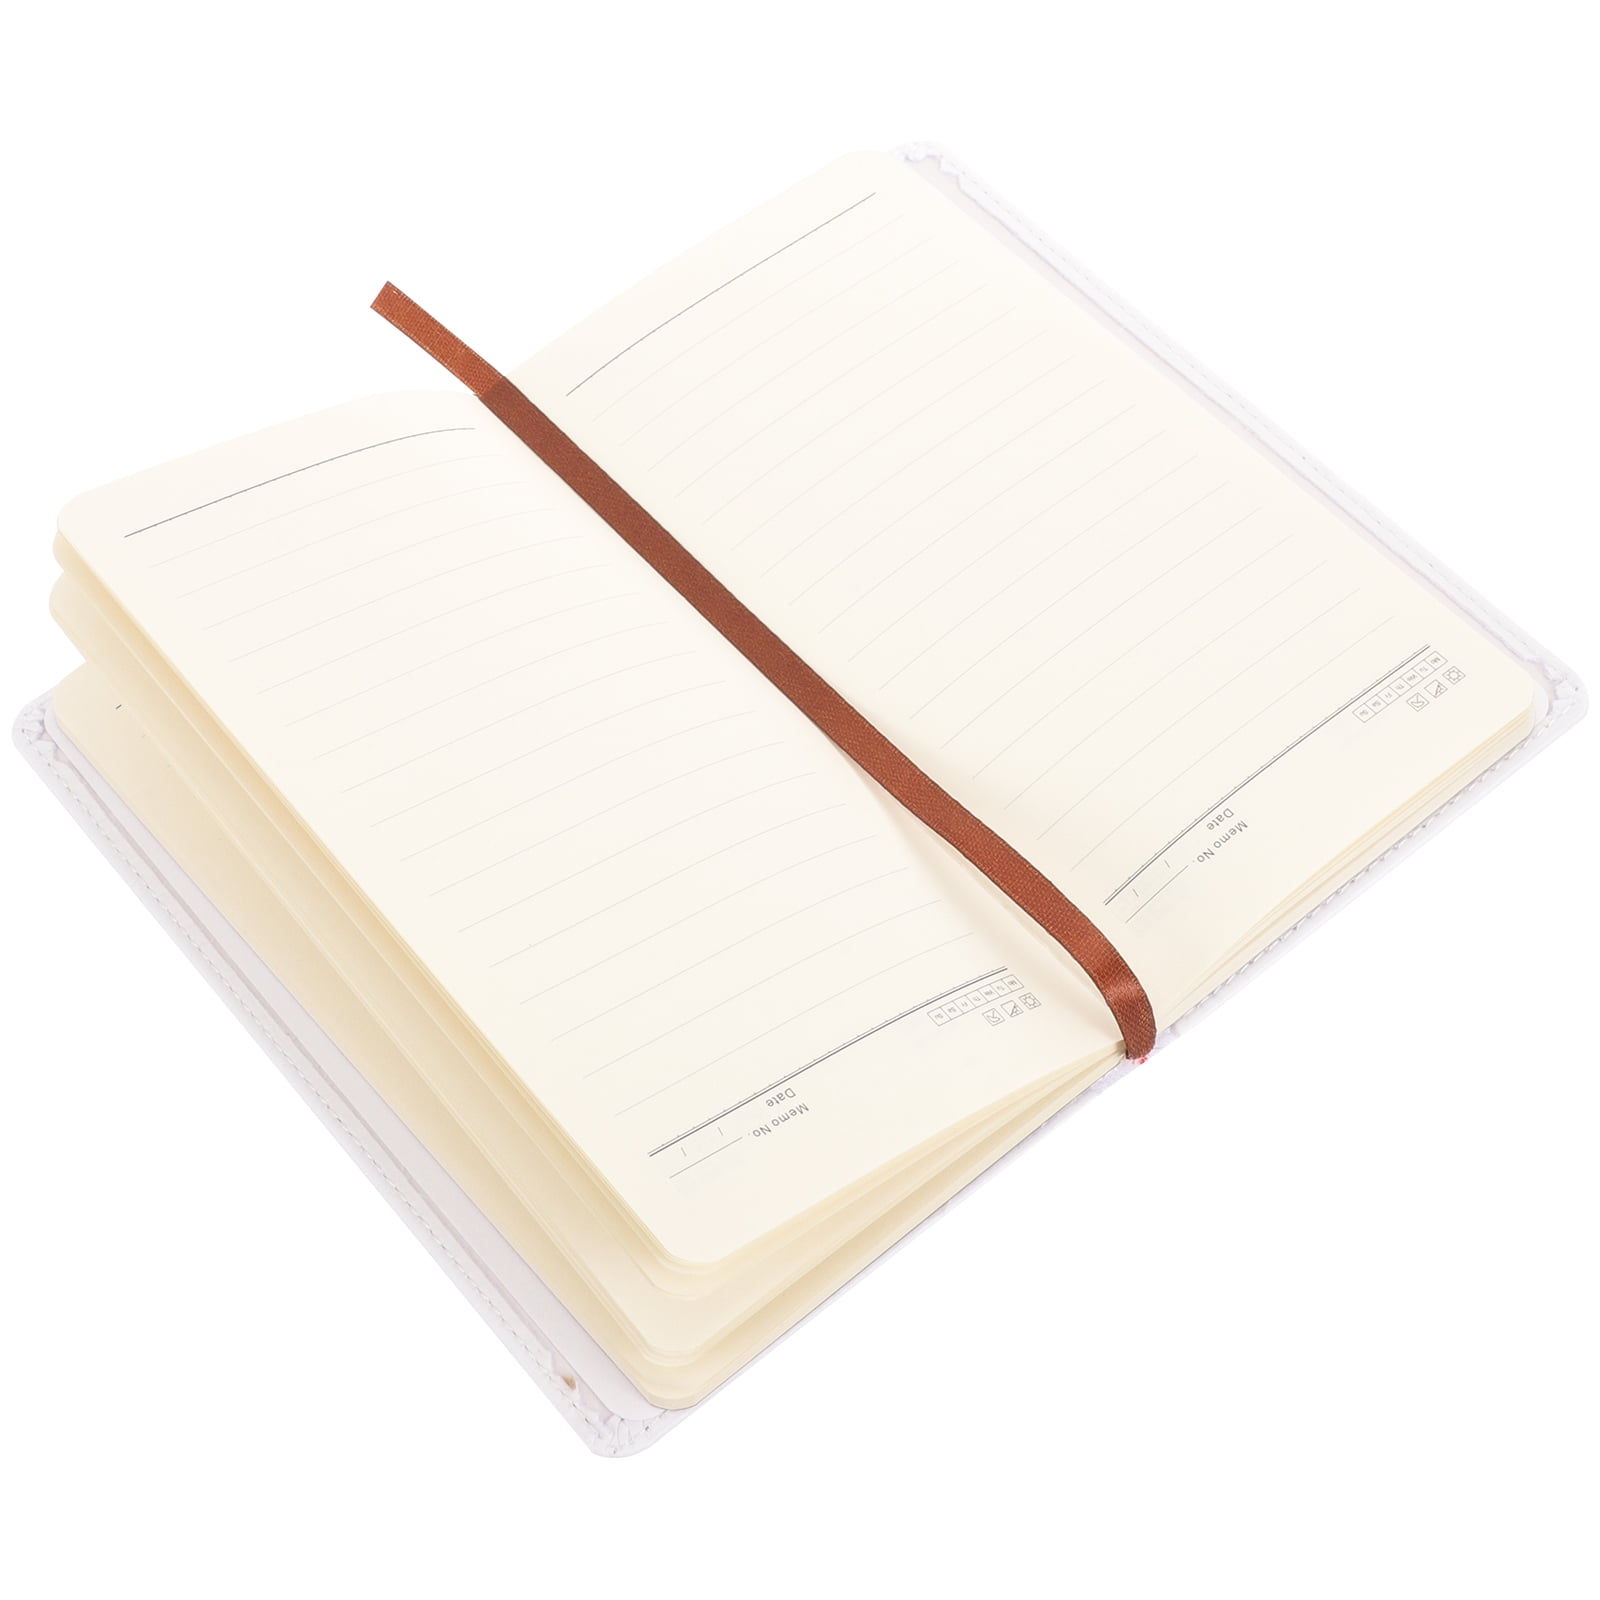  Qeeenar 4 Pcs Sublimation Journal Blank Notebooks A6